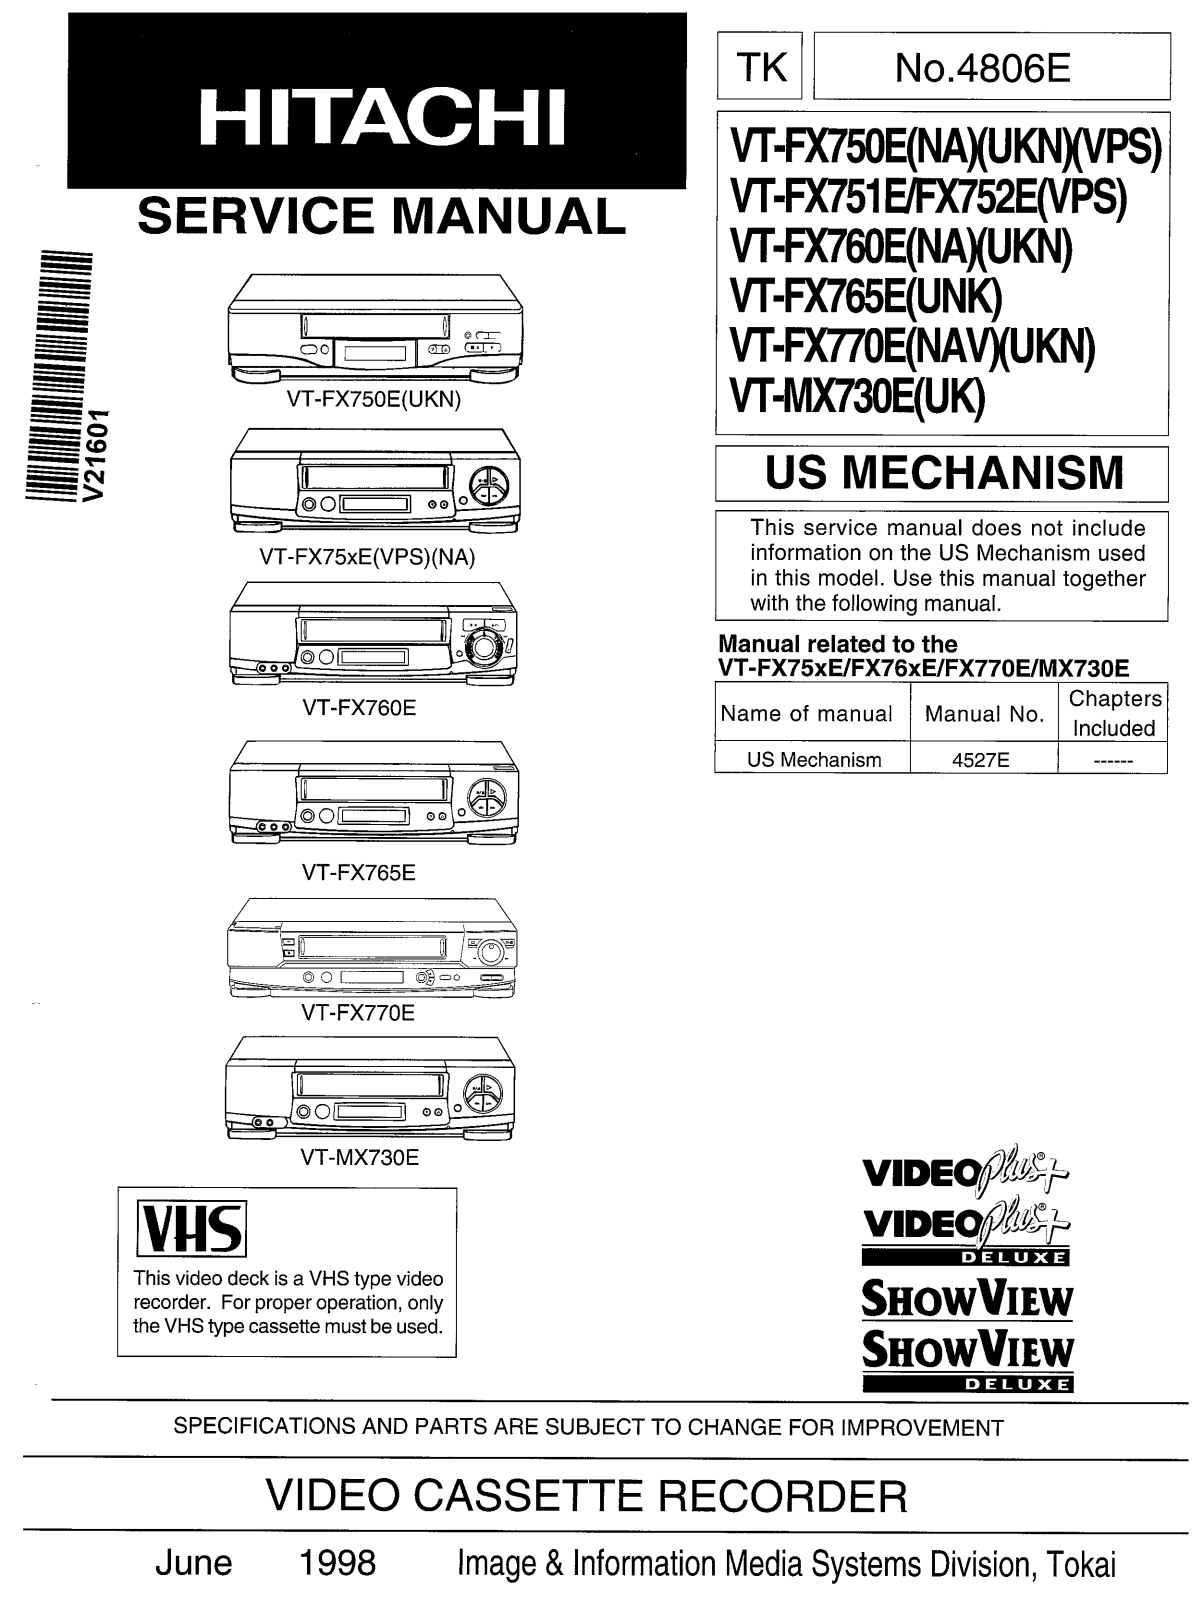 Hitachi VT-FX750E, VT-FX770E, VT-MX730E, VT-FX760E, VT-FX765E Service Manual